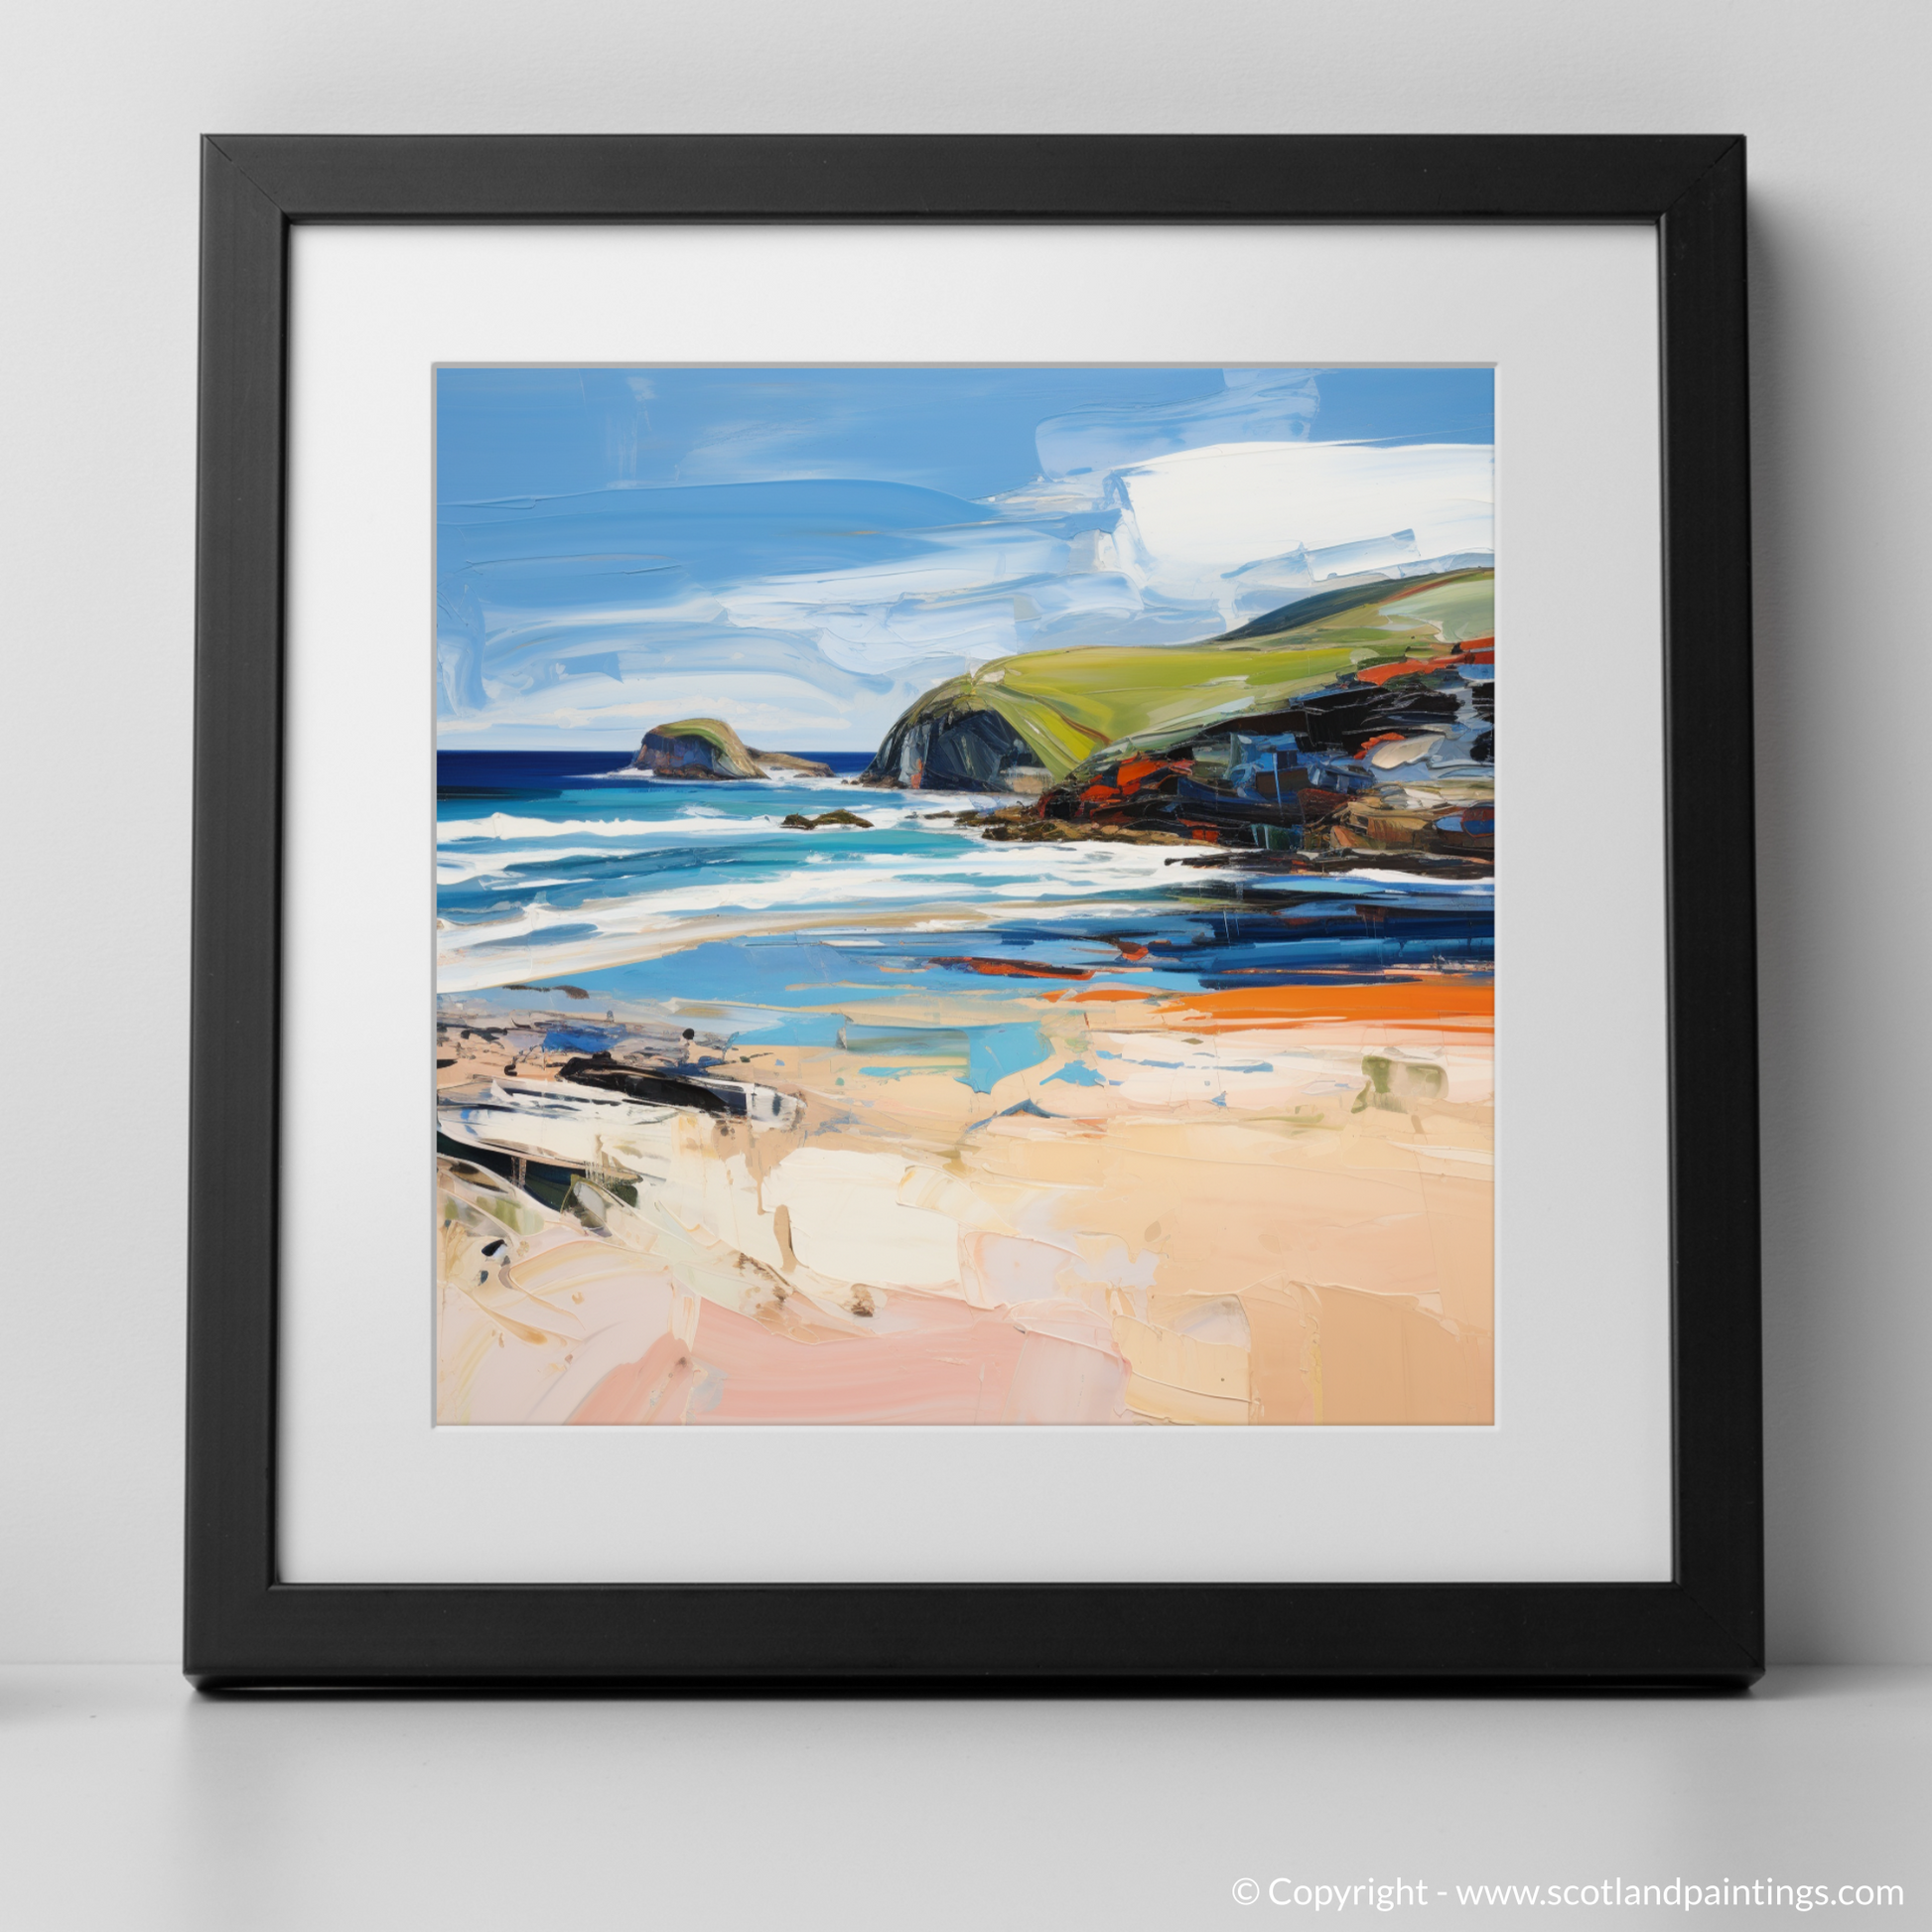 Art Print of Sandwood Bay, Sutherland with a black frame